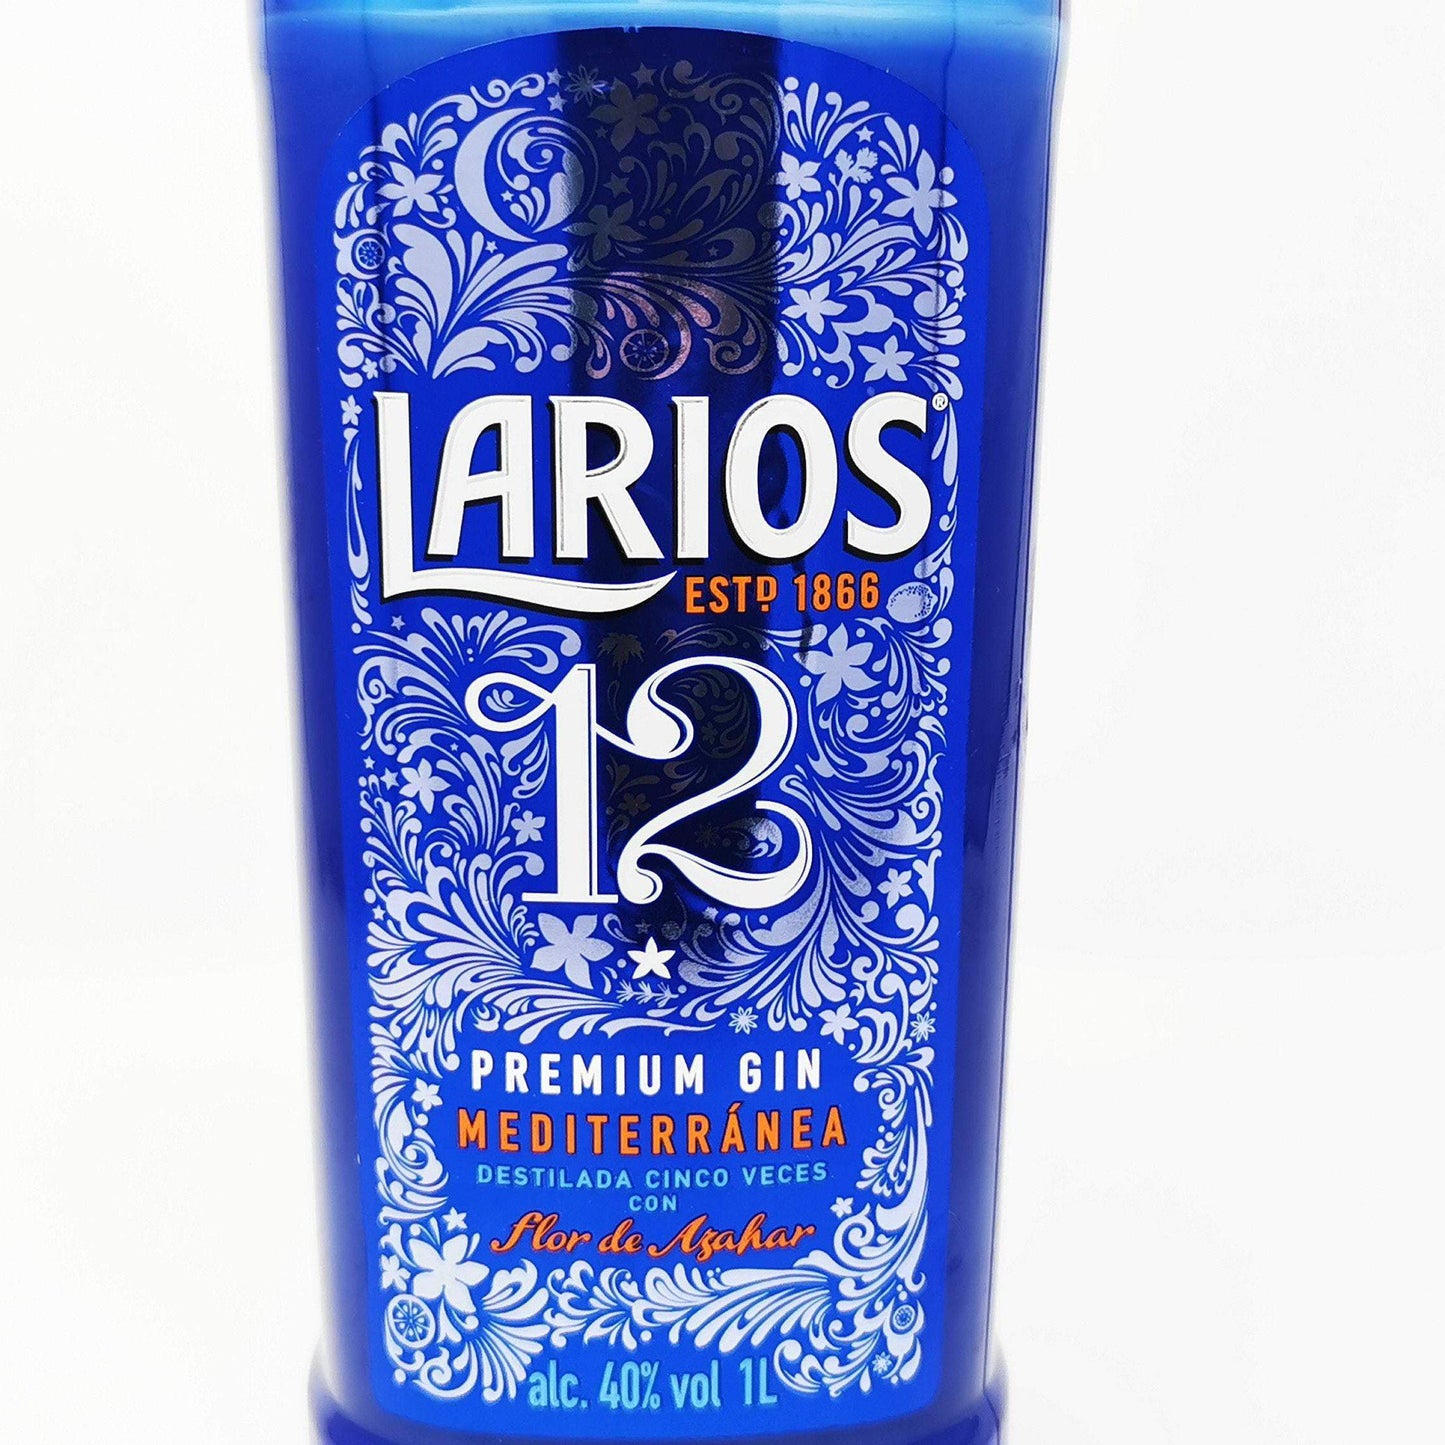 Larios 12 Premium Gin Bottle Candle-Gin Bottle Candles-Adhock Homeware